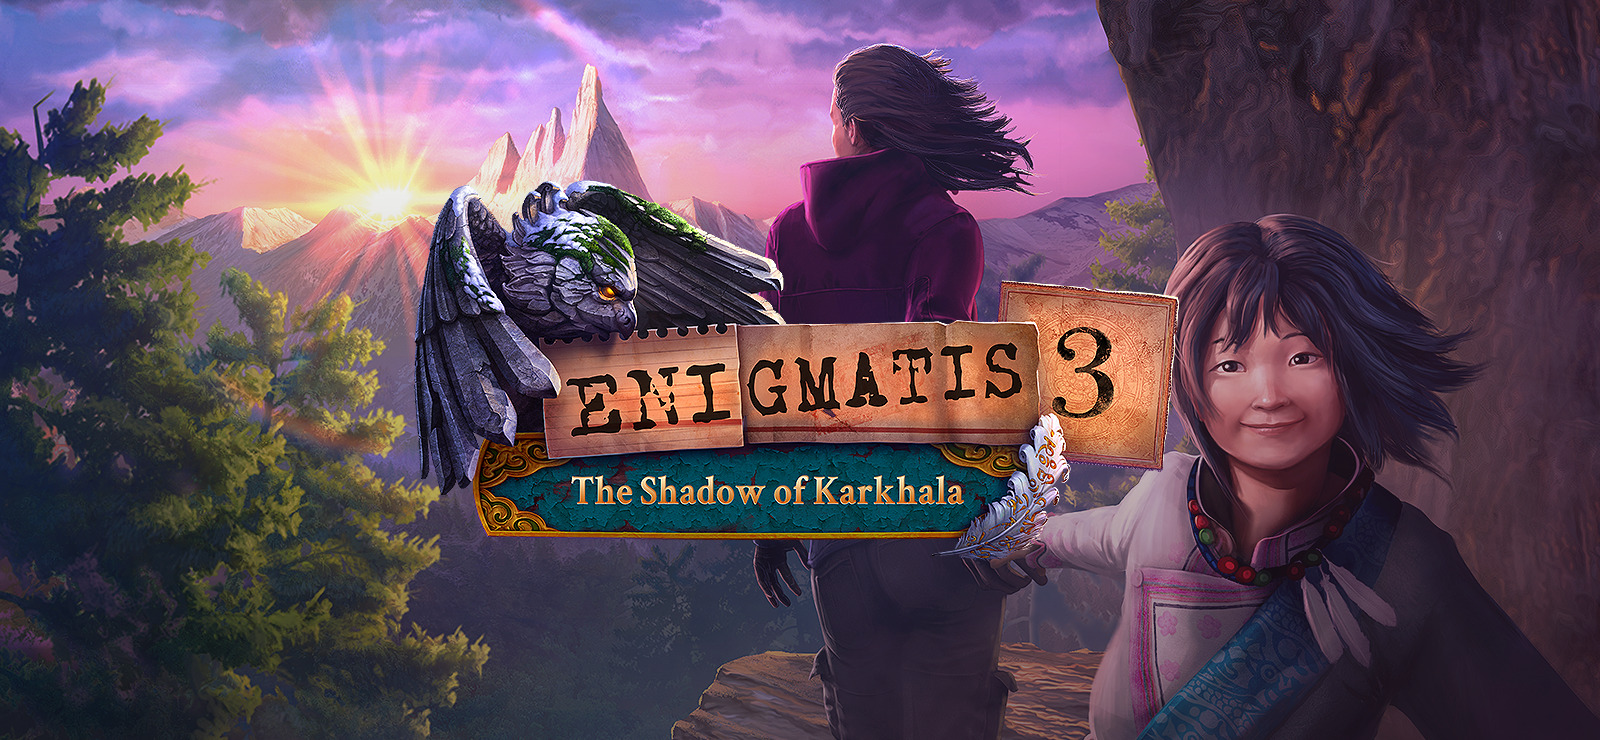 enigmatis-3-the-shadow-of-karkhala-free-download-gog-unlocked